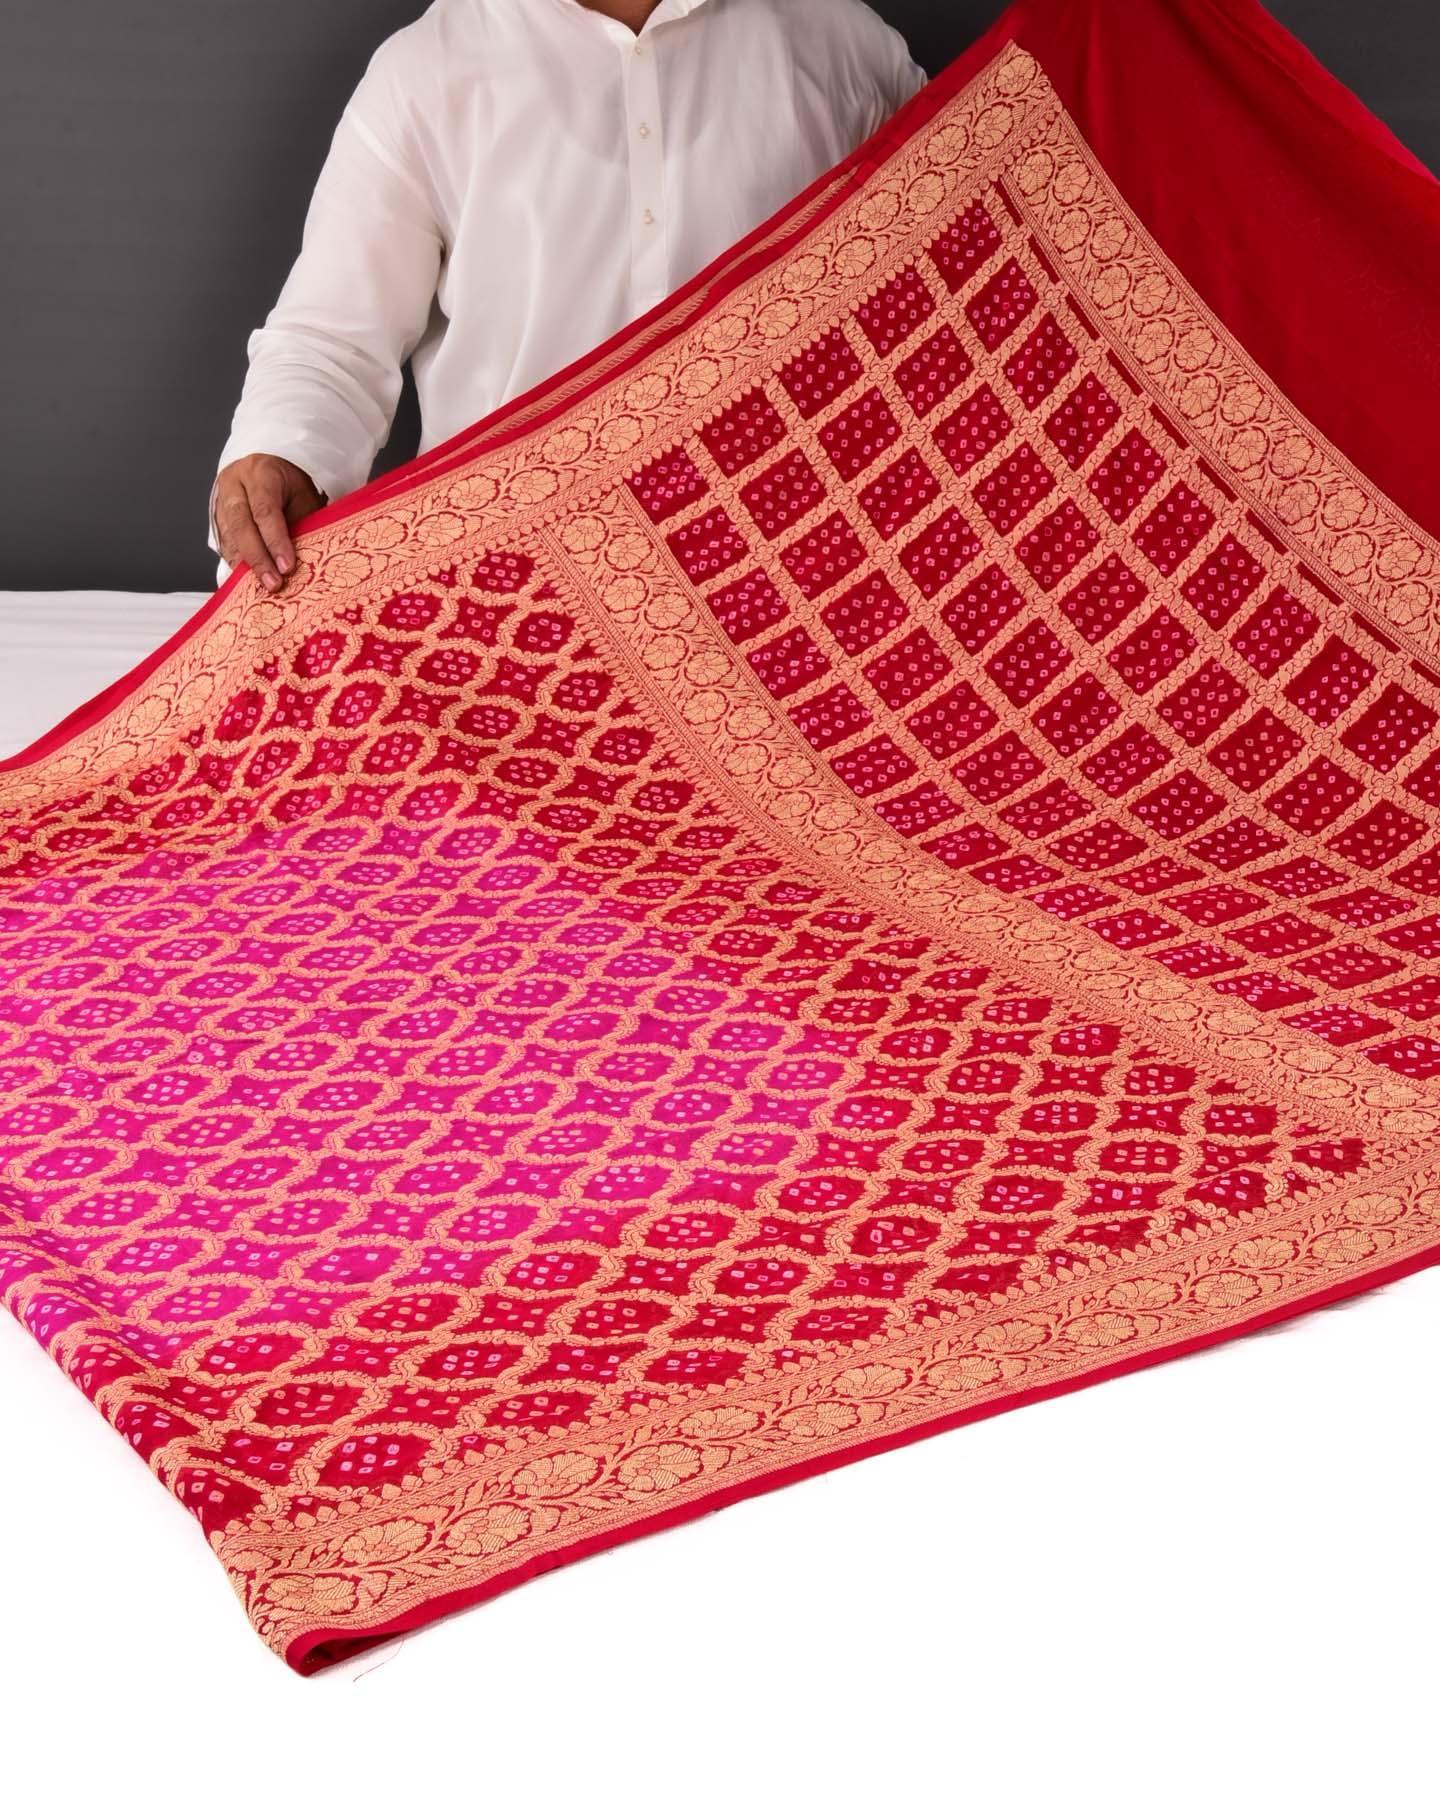 Shaded Red-Pink Banarasi Gold Zari Cutwork Brocade Handwoven Khaddi Georgette Saree with White Bandhej - By HolyWeaves, Benares